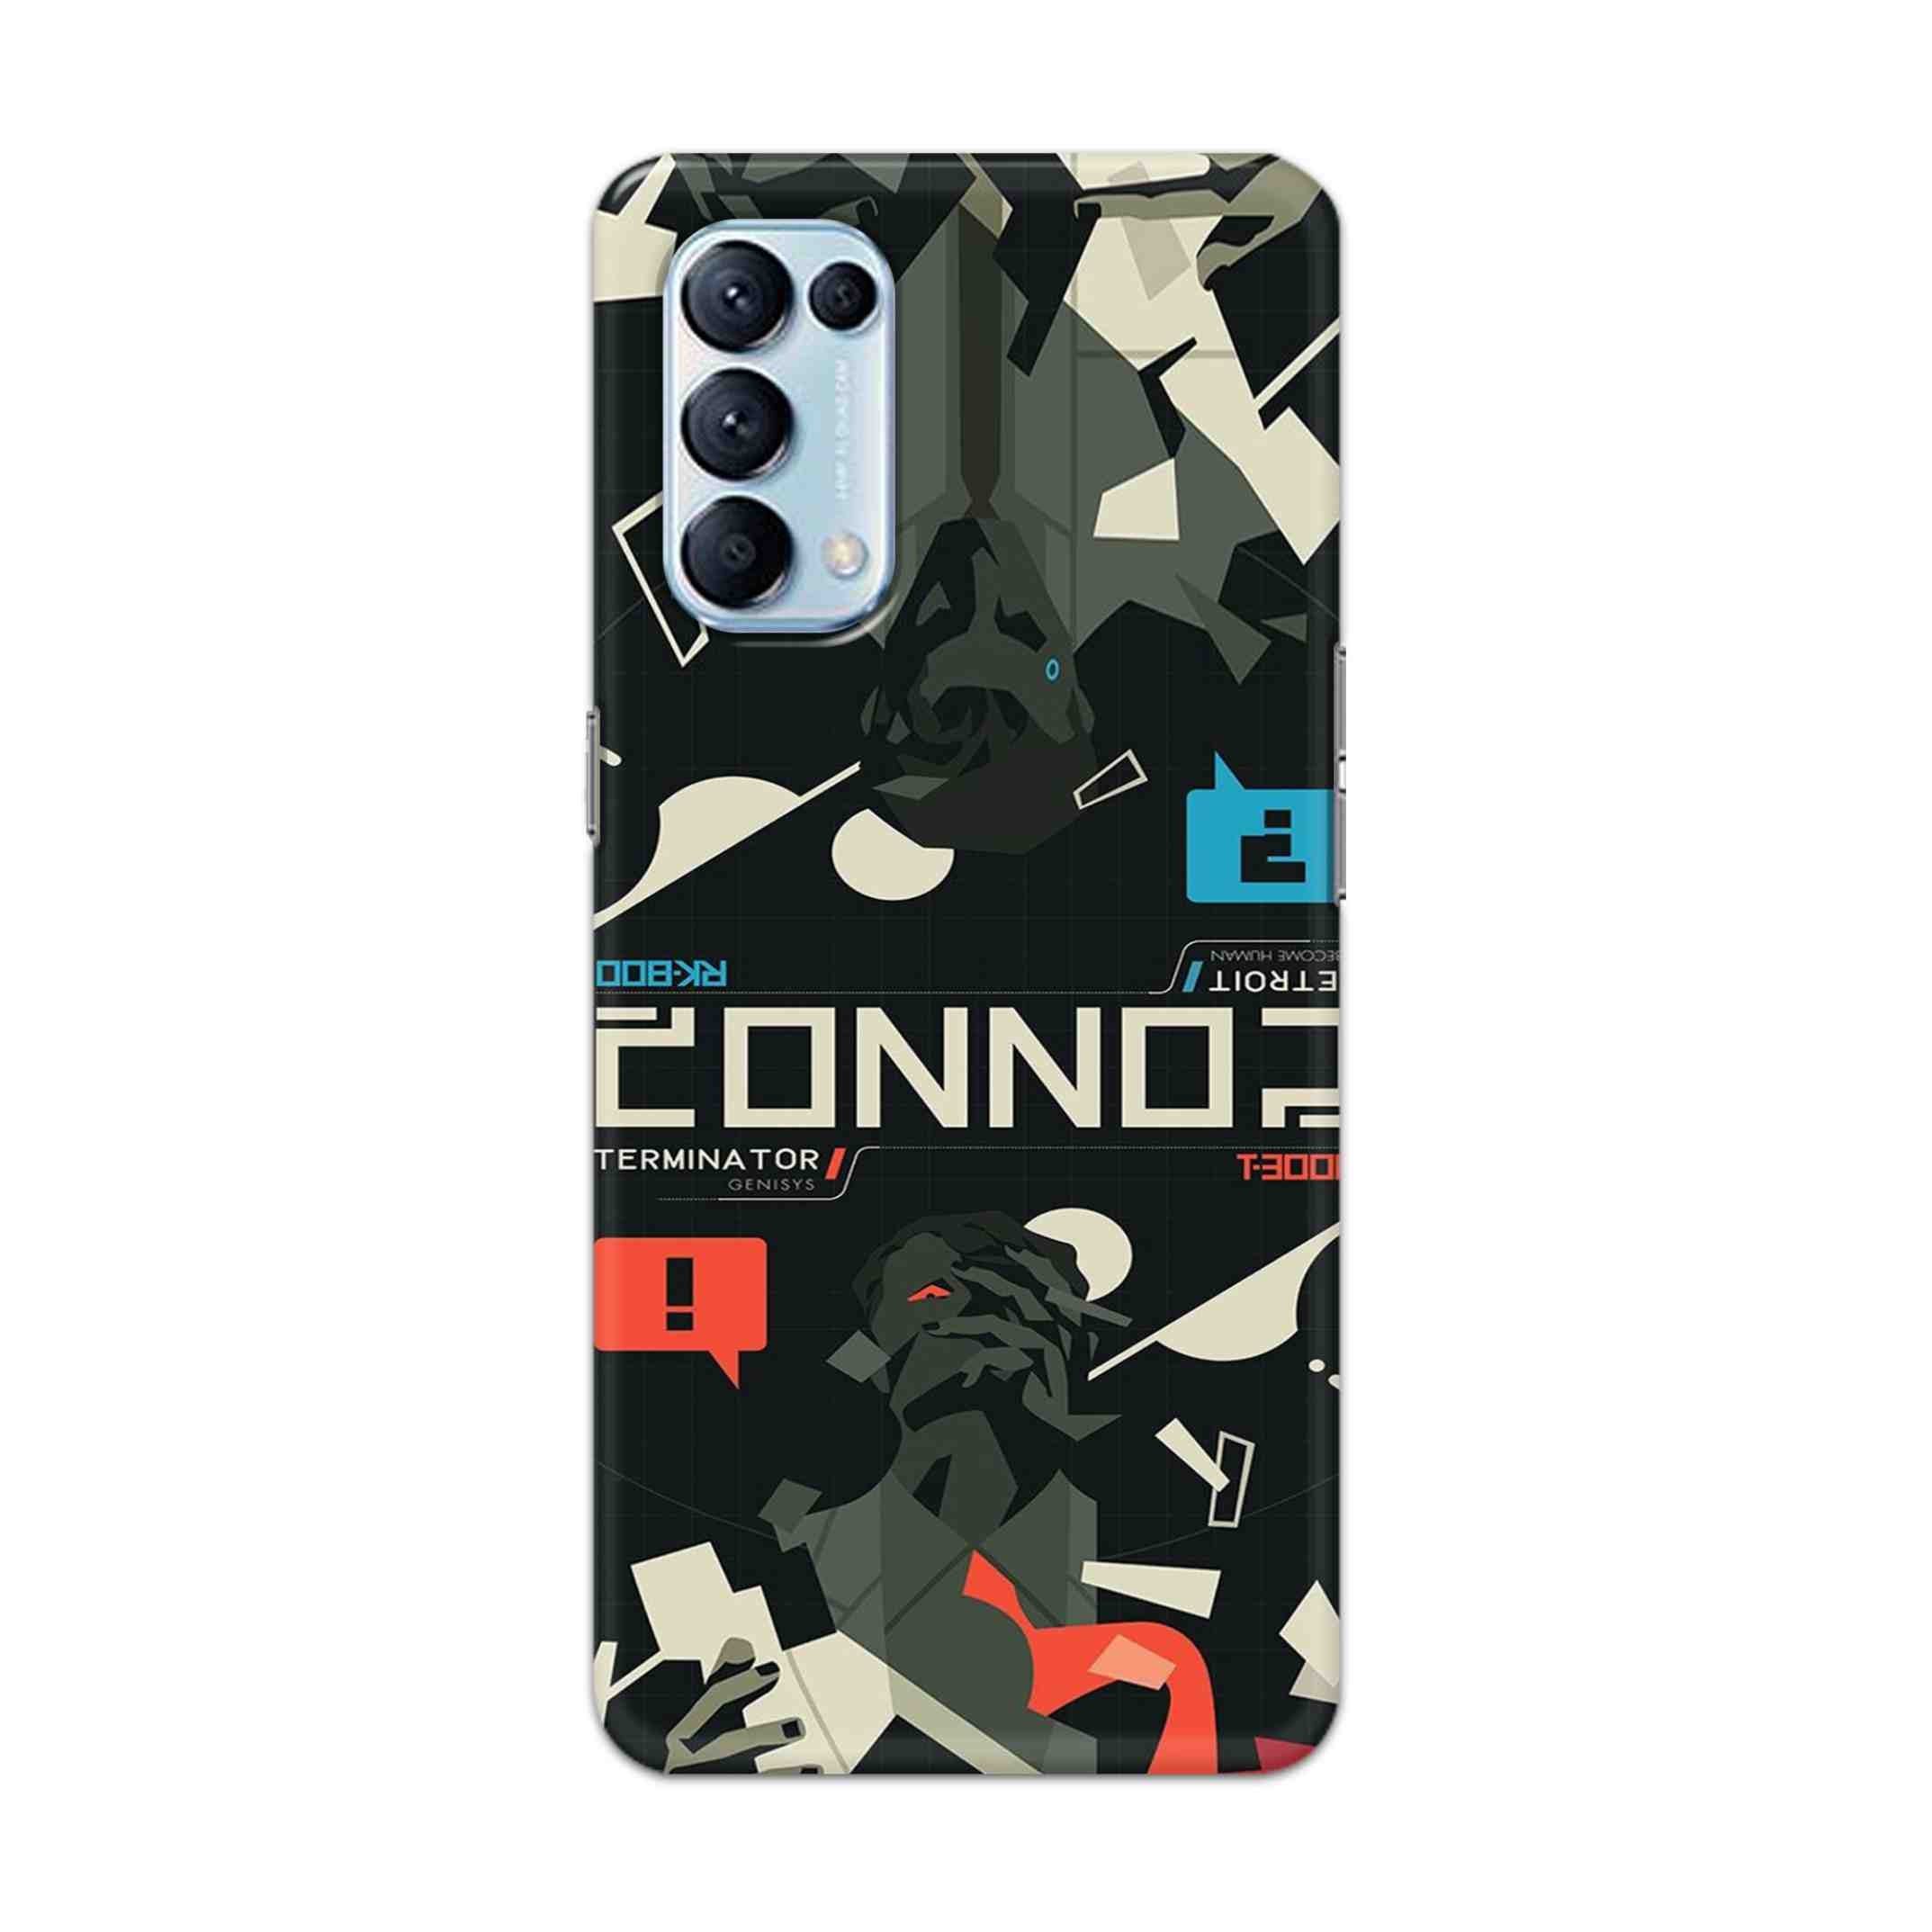 Buy Terminator Hard Back Mobile Phone Case Cover For Oppo Reno 5 Pro 5G Online